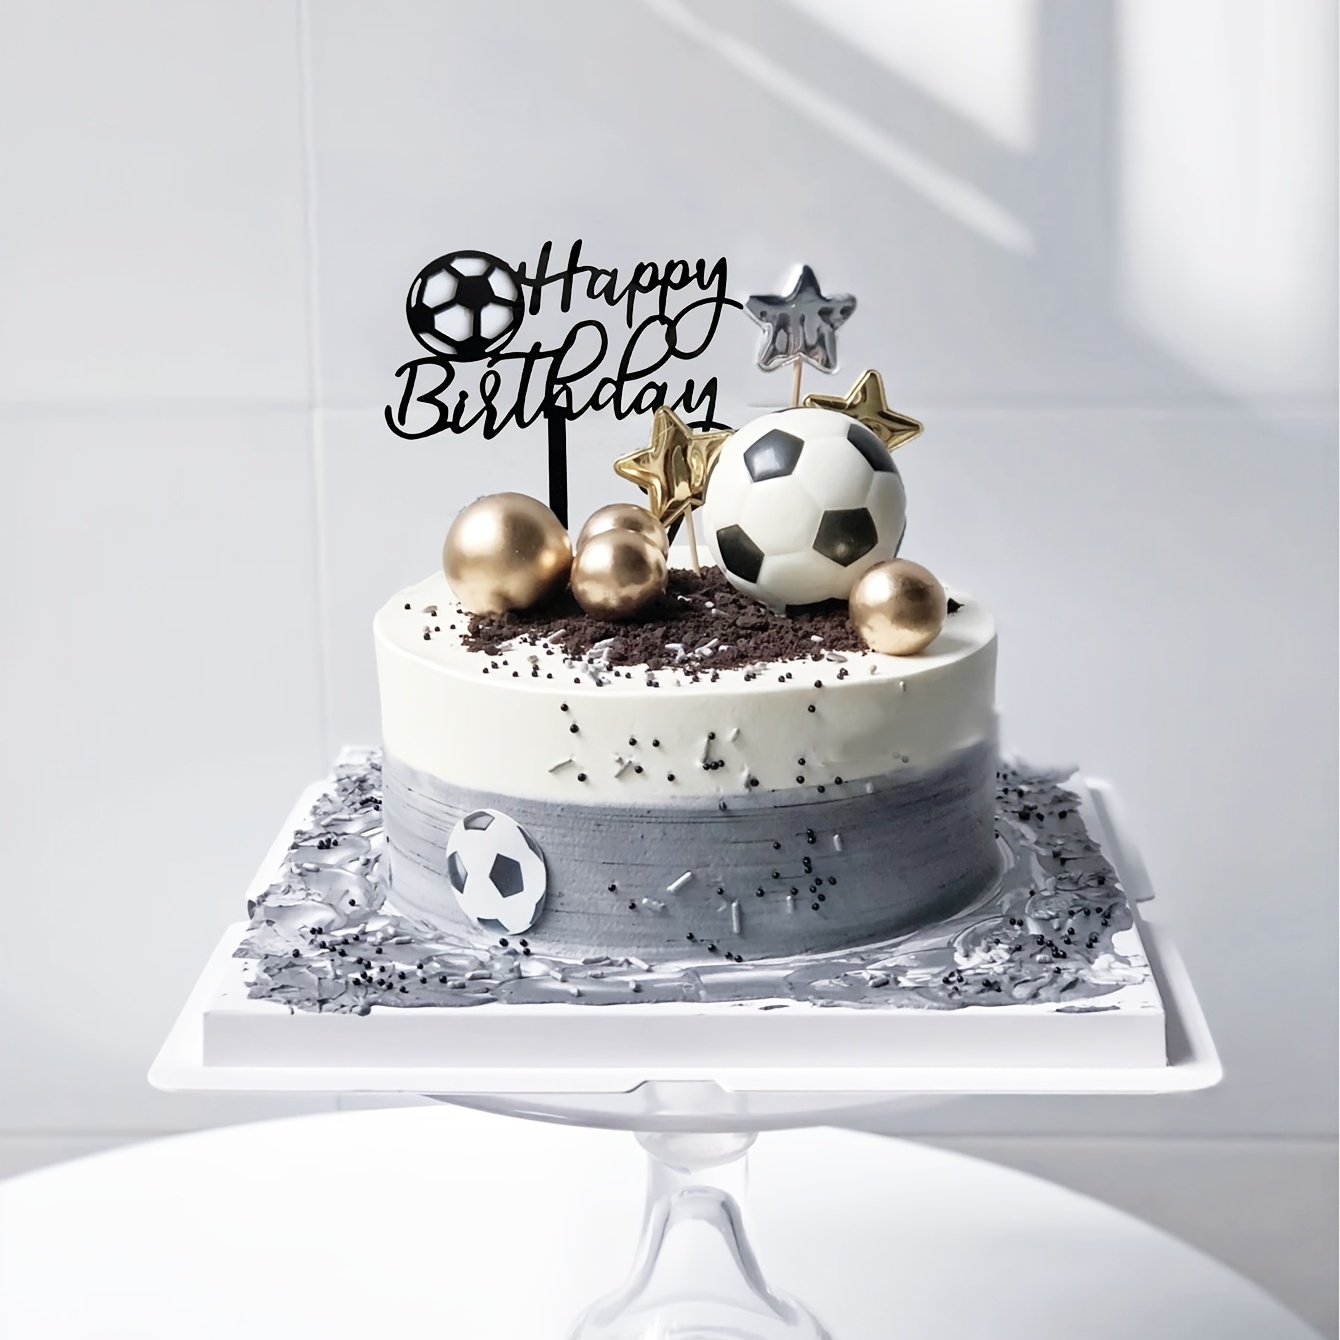 Brazil Soccer Team Cake Topper, Brasil Cake Topper, Brasil Birthday, Custom  Brasil Birthday Cake Topper. 